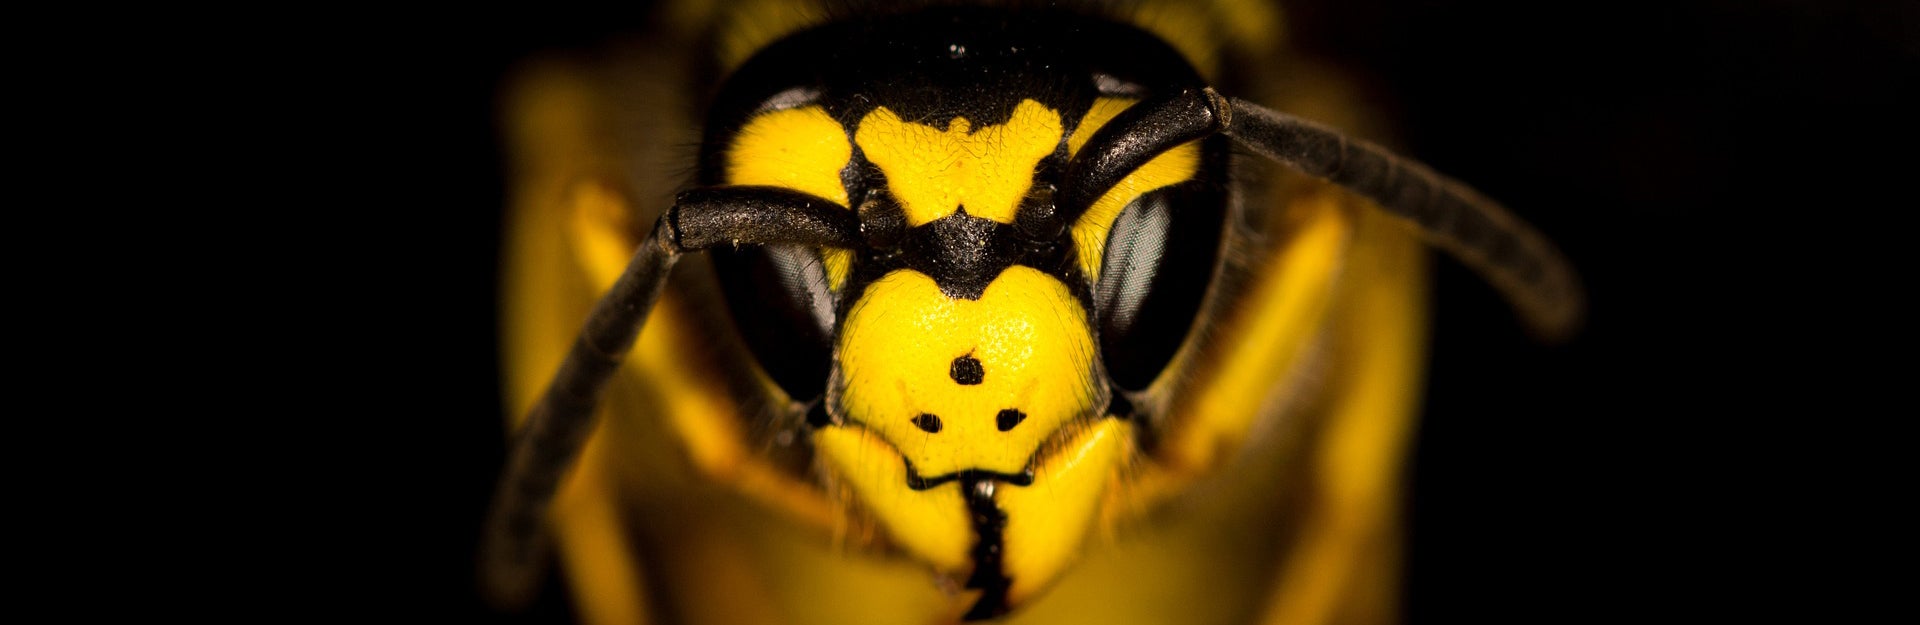 Wasp macro photography, source: Pixabay